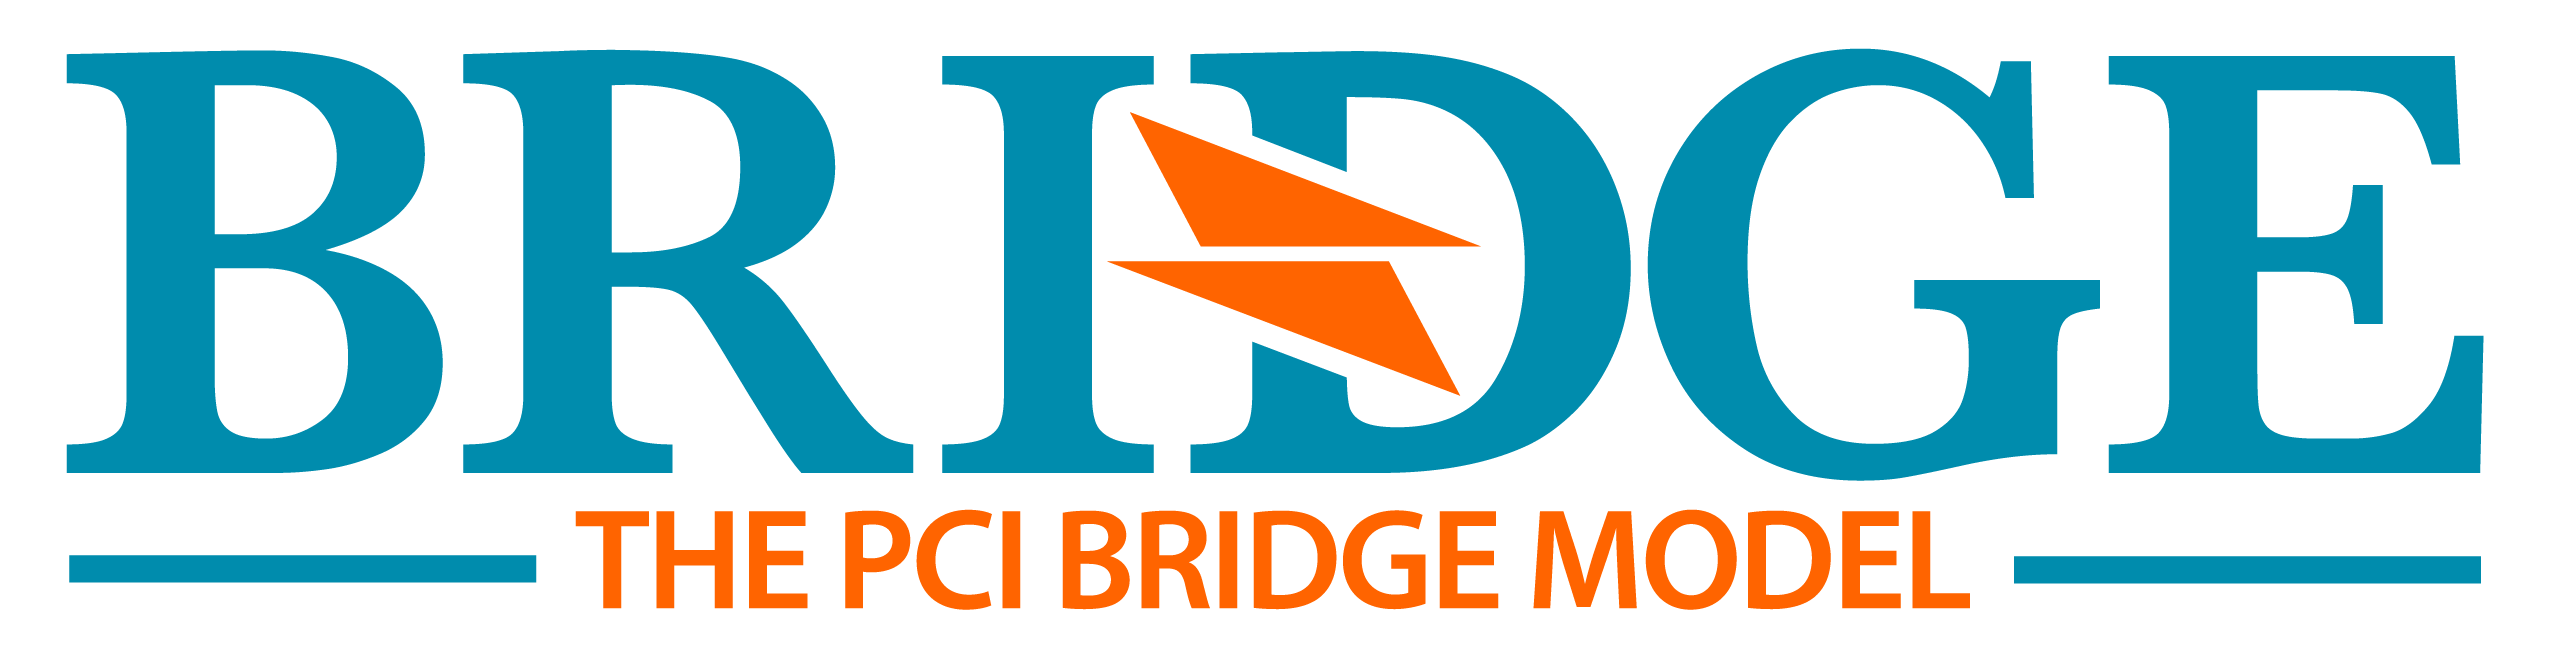 BRIDGE MODEL